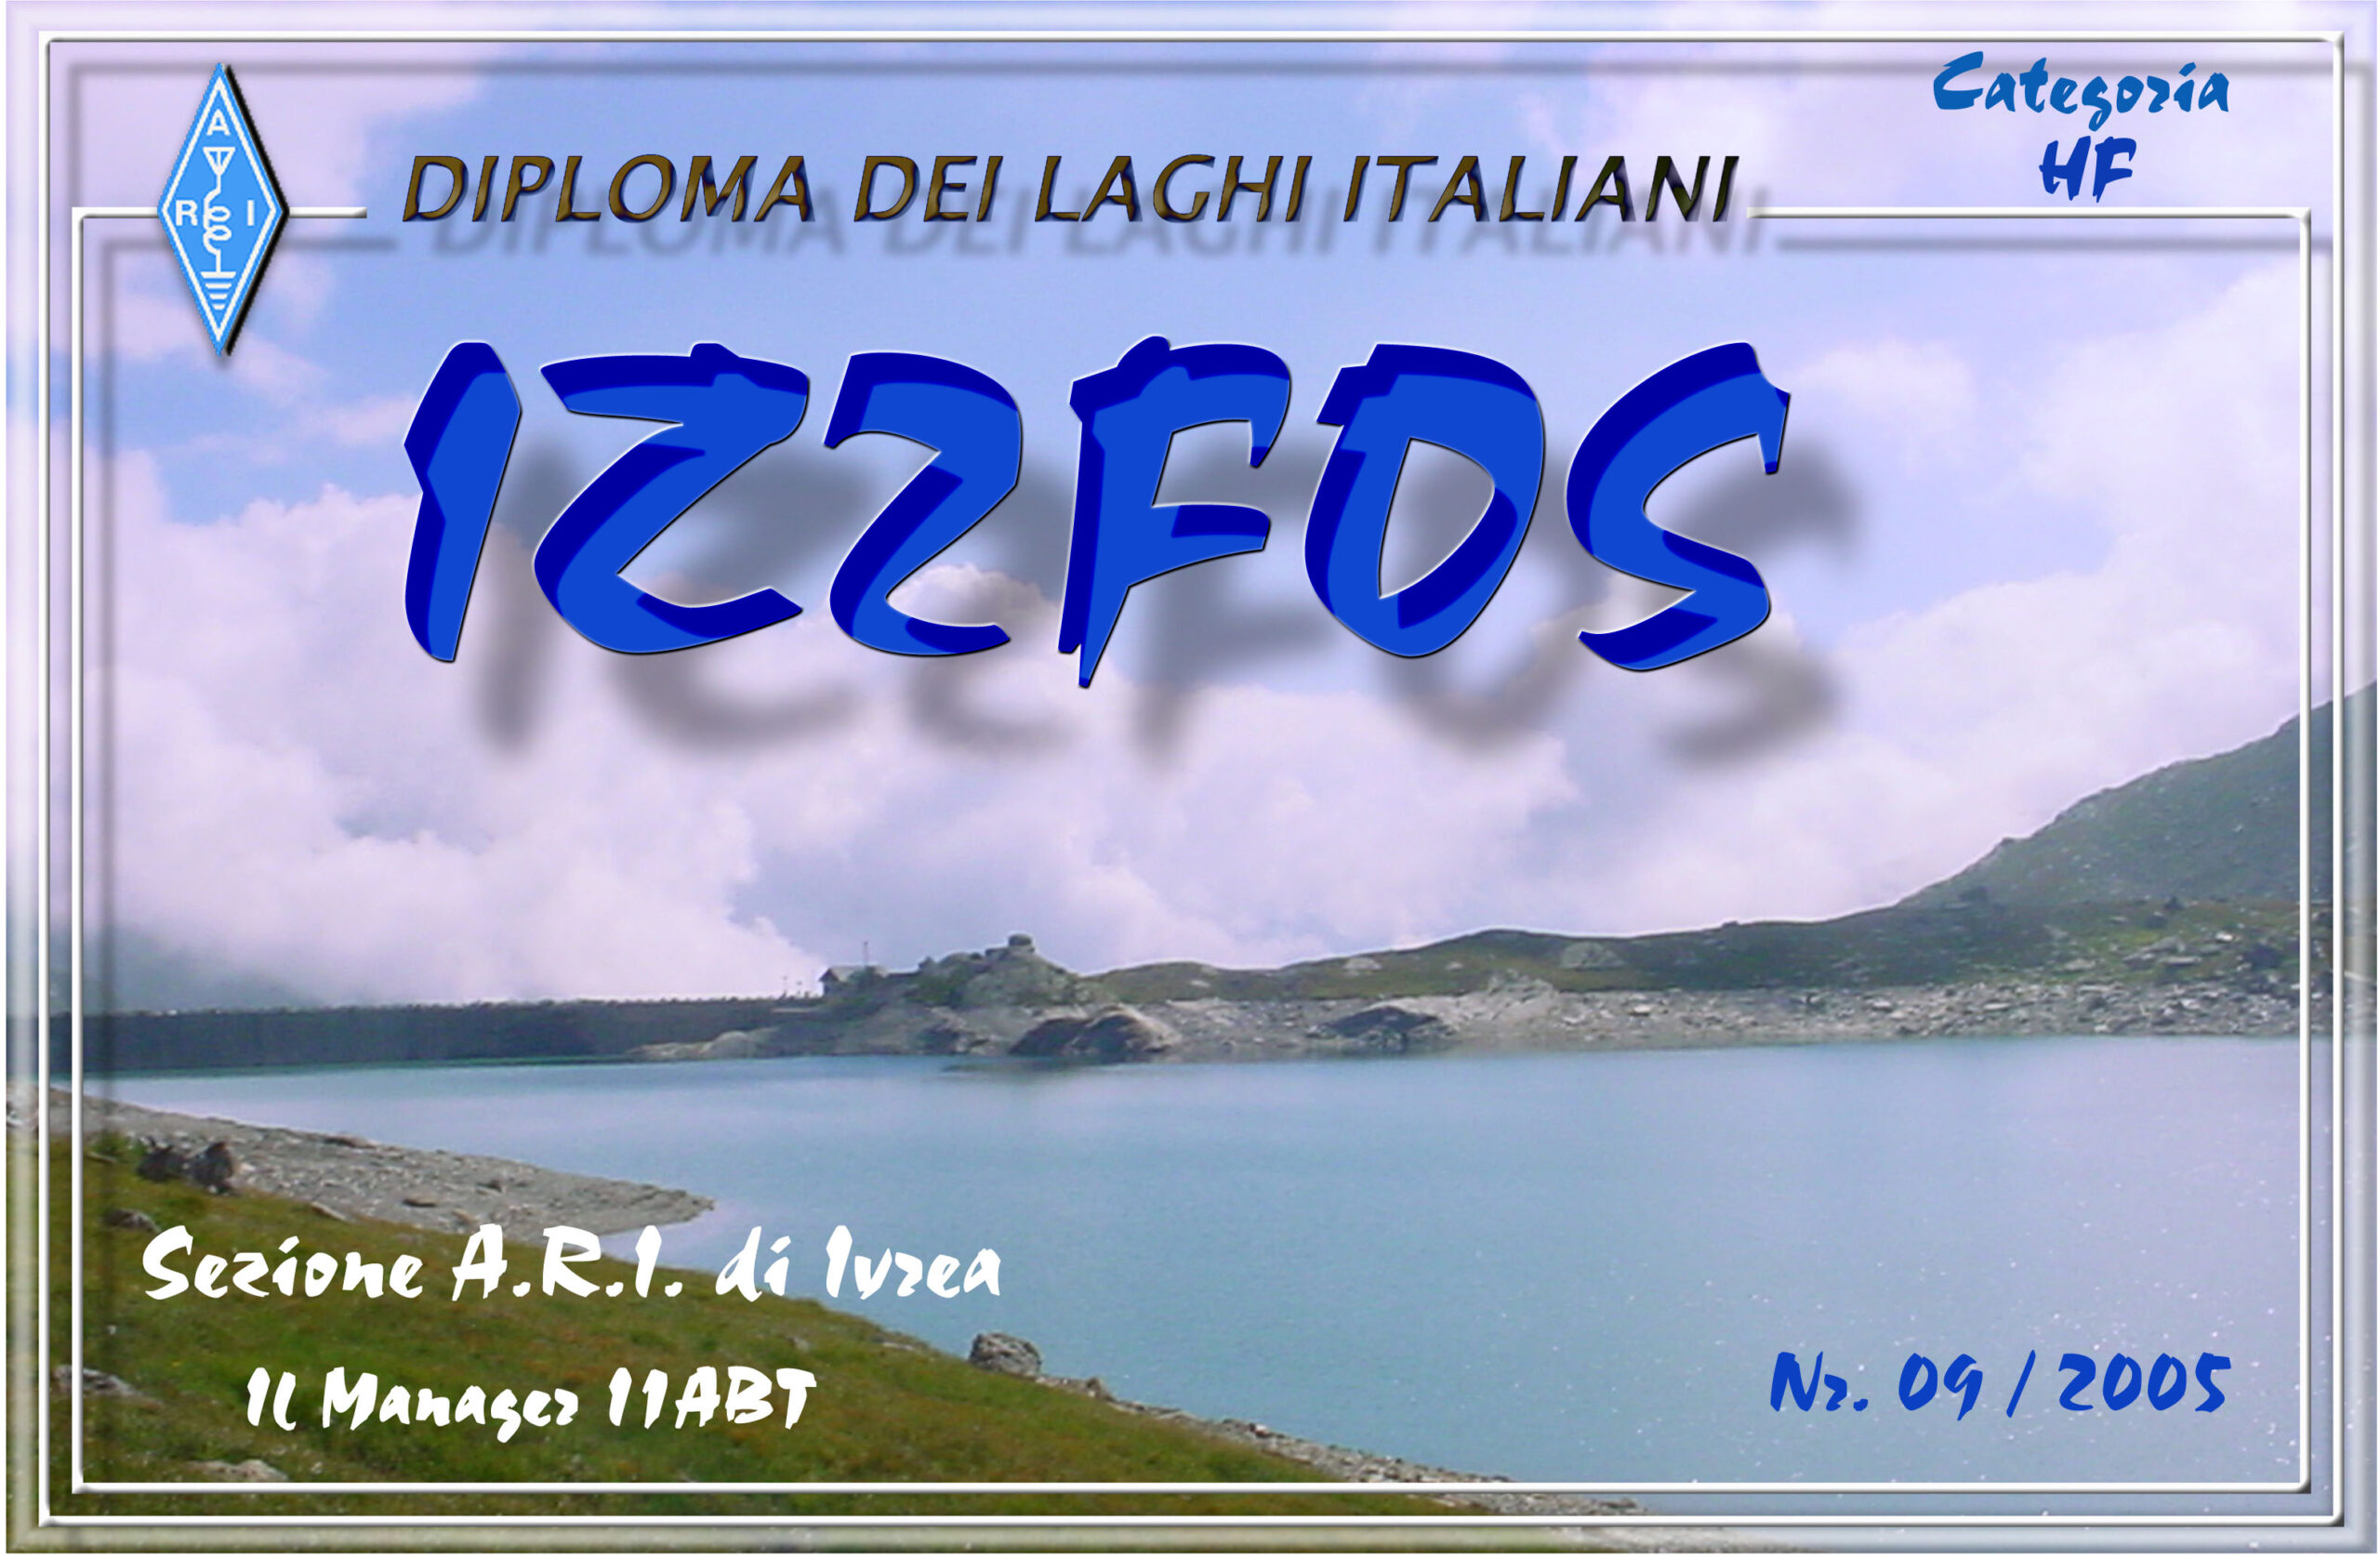 IZ2FOS-DLI-2005-scaled